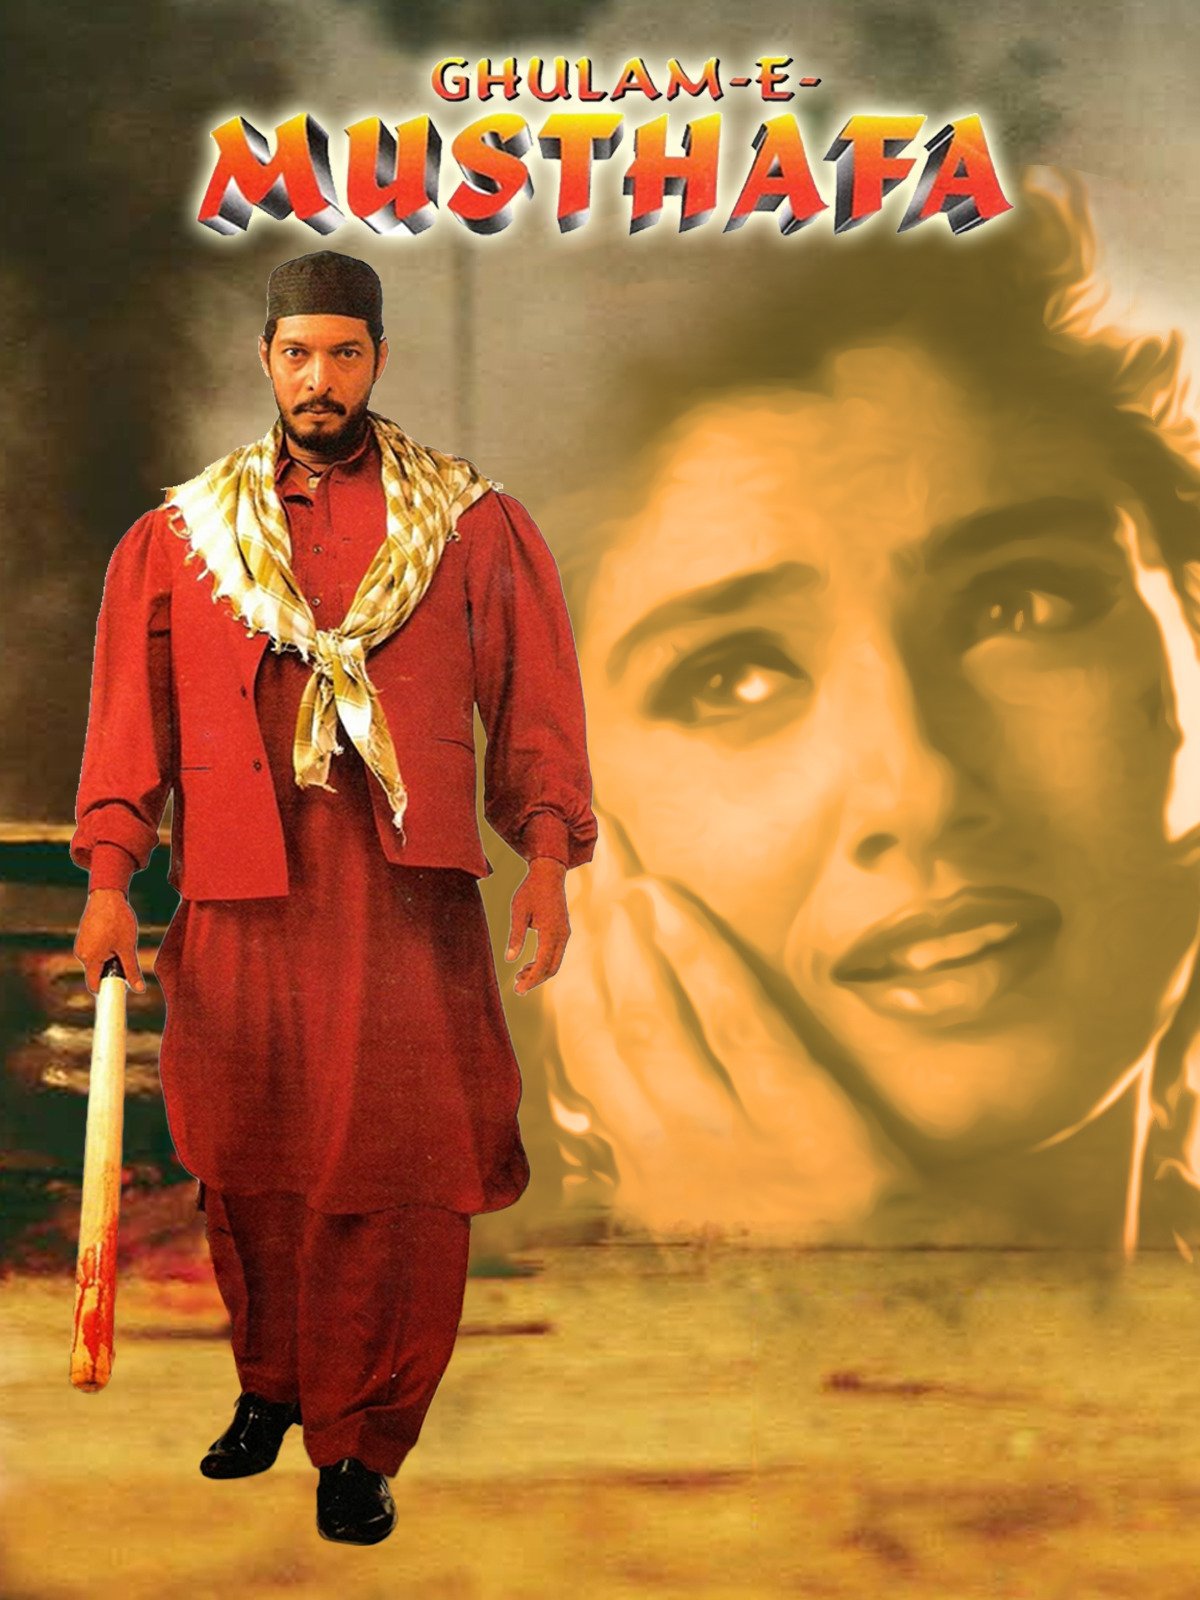 ghulam-e-musthafa-1997-8368-poster.jpg